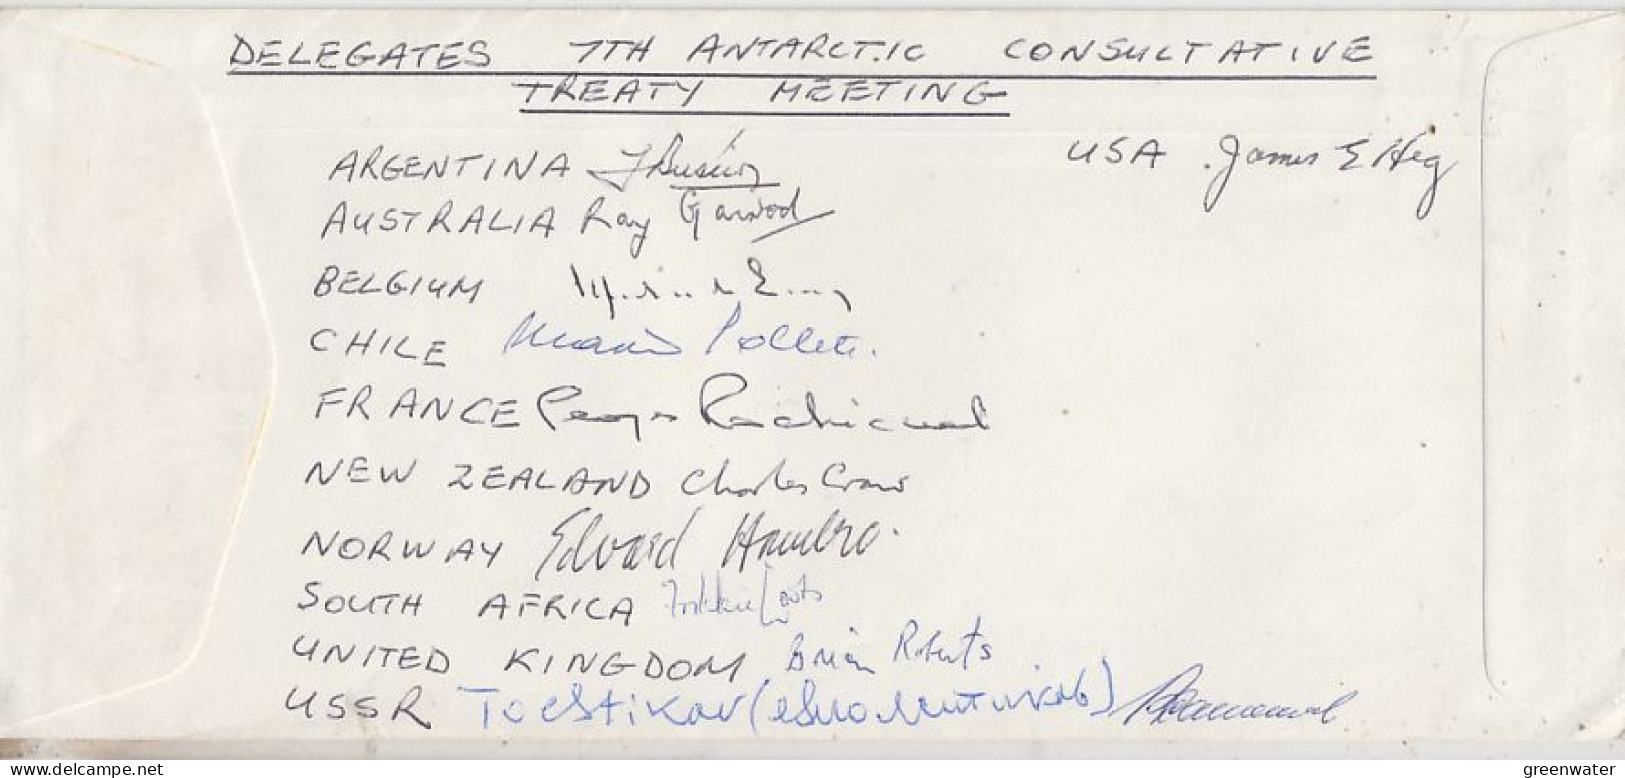 Ross Dependency "Delegates 7th. Antarctic Consultatie Treaty Meeting Wellington 1972 Ca Scott Base  20 NOV 1972 (RO206) - Storia Postale